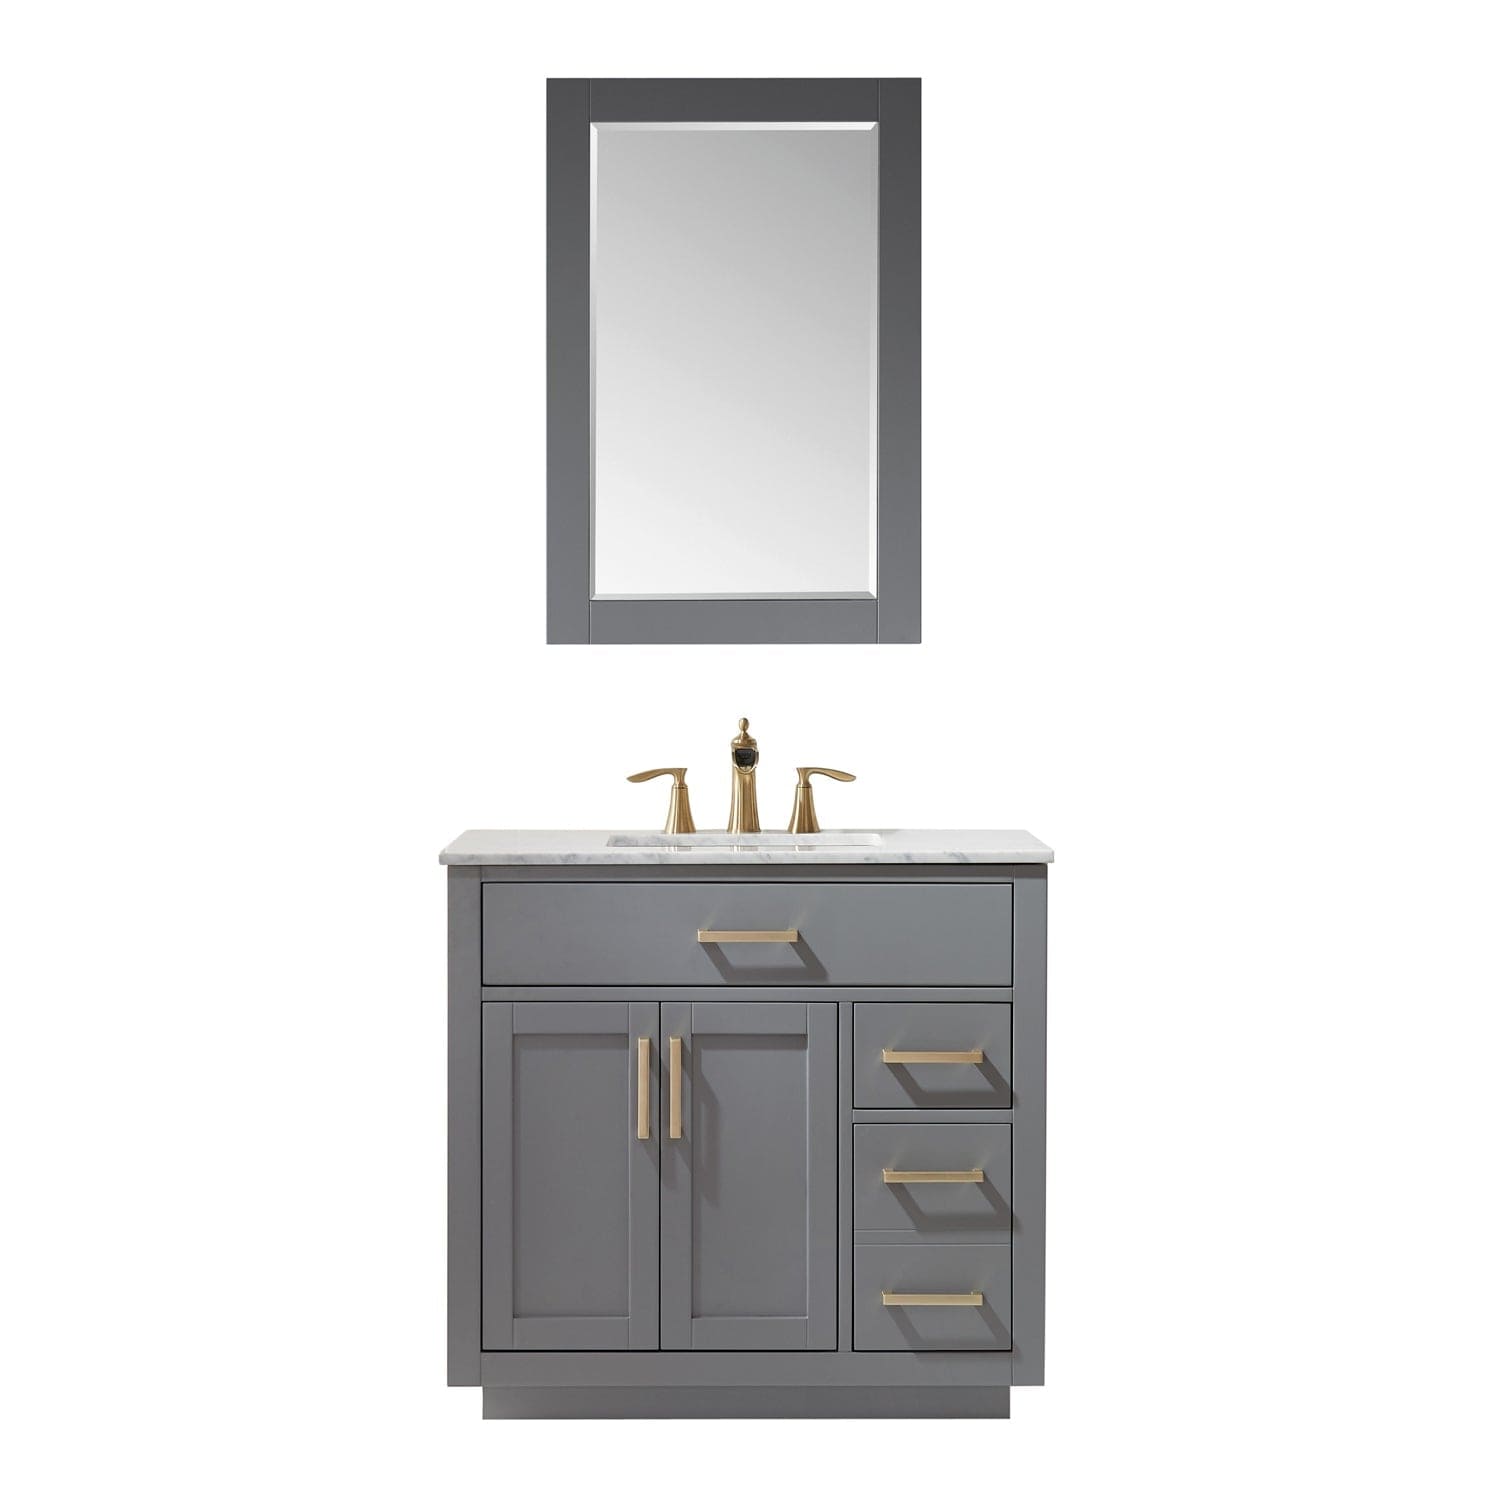 Altair Ivy 36" Single Bathroom Vanity Set in Gray and Carrara White Marble Countertop with Mirror 531036-GR-CA - Molaix631112971096Vanity531036-GR-CA